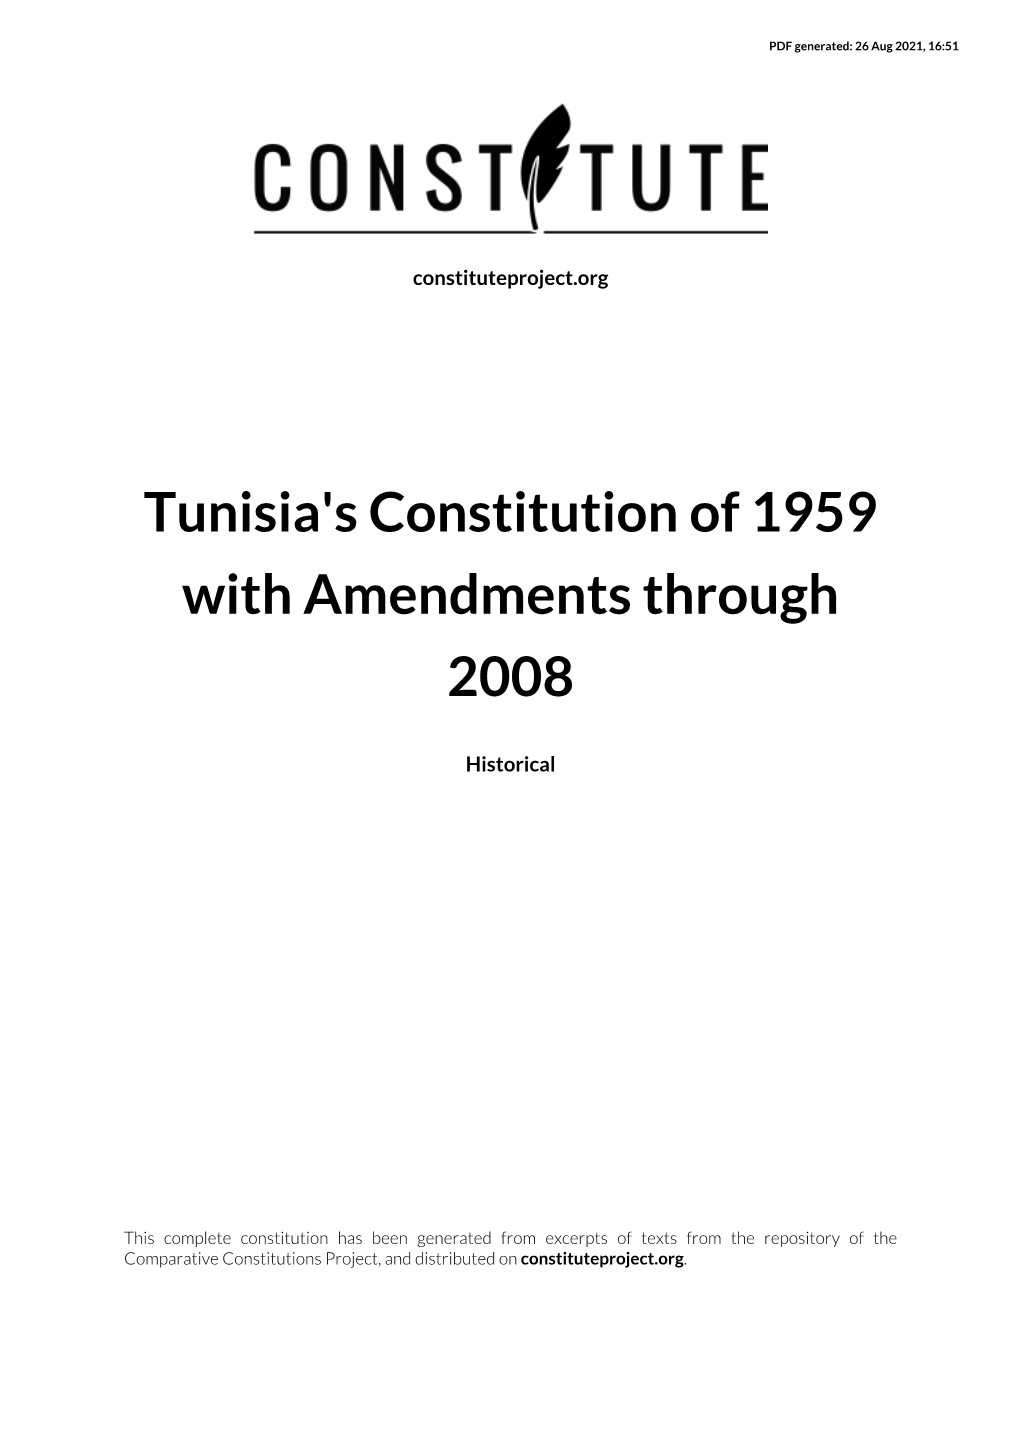 Tunisia's Constitution of 1959 with Amendments Through 2008